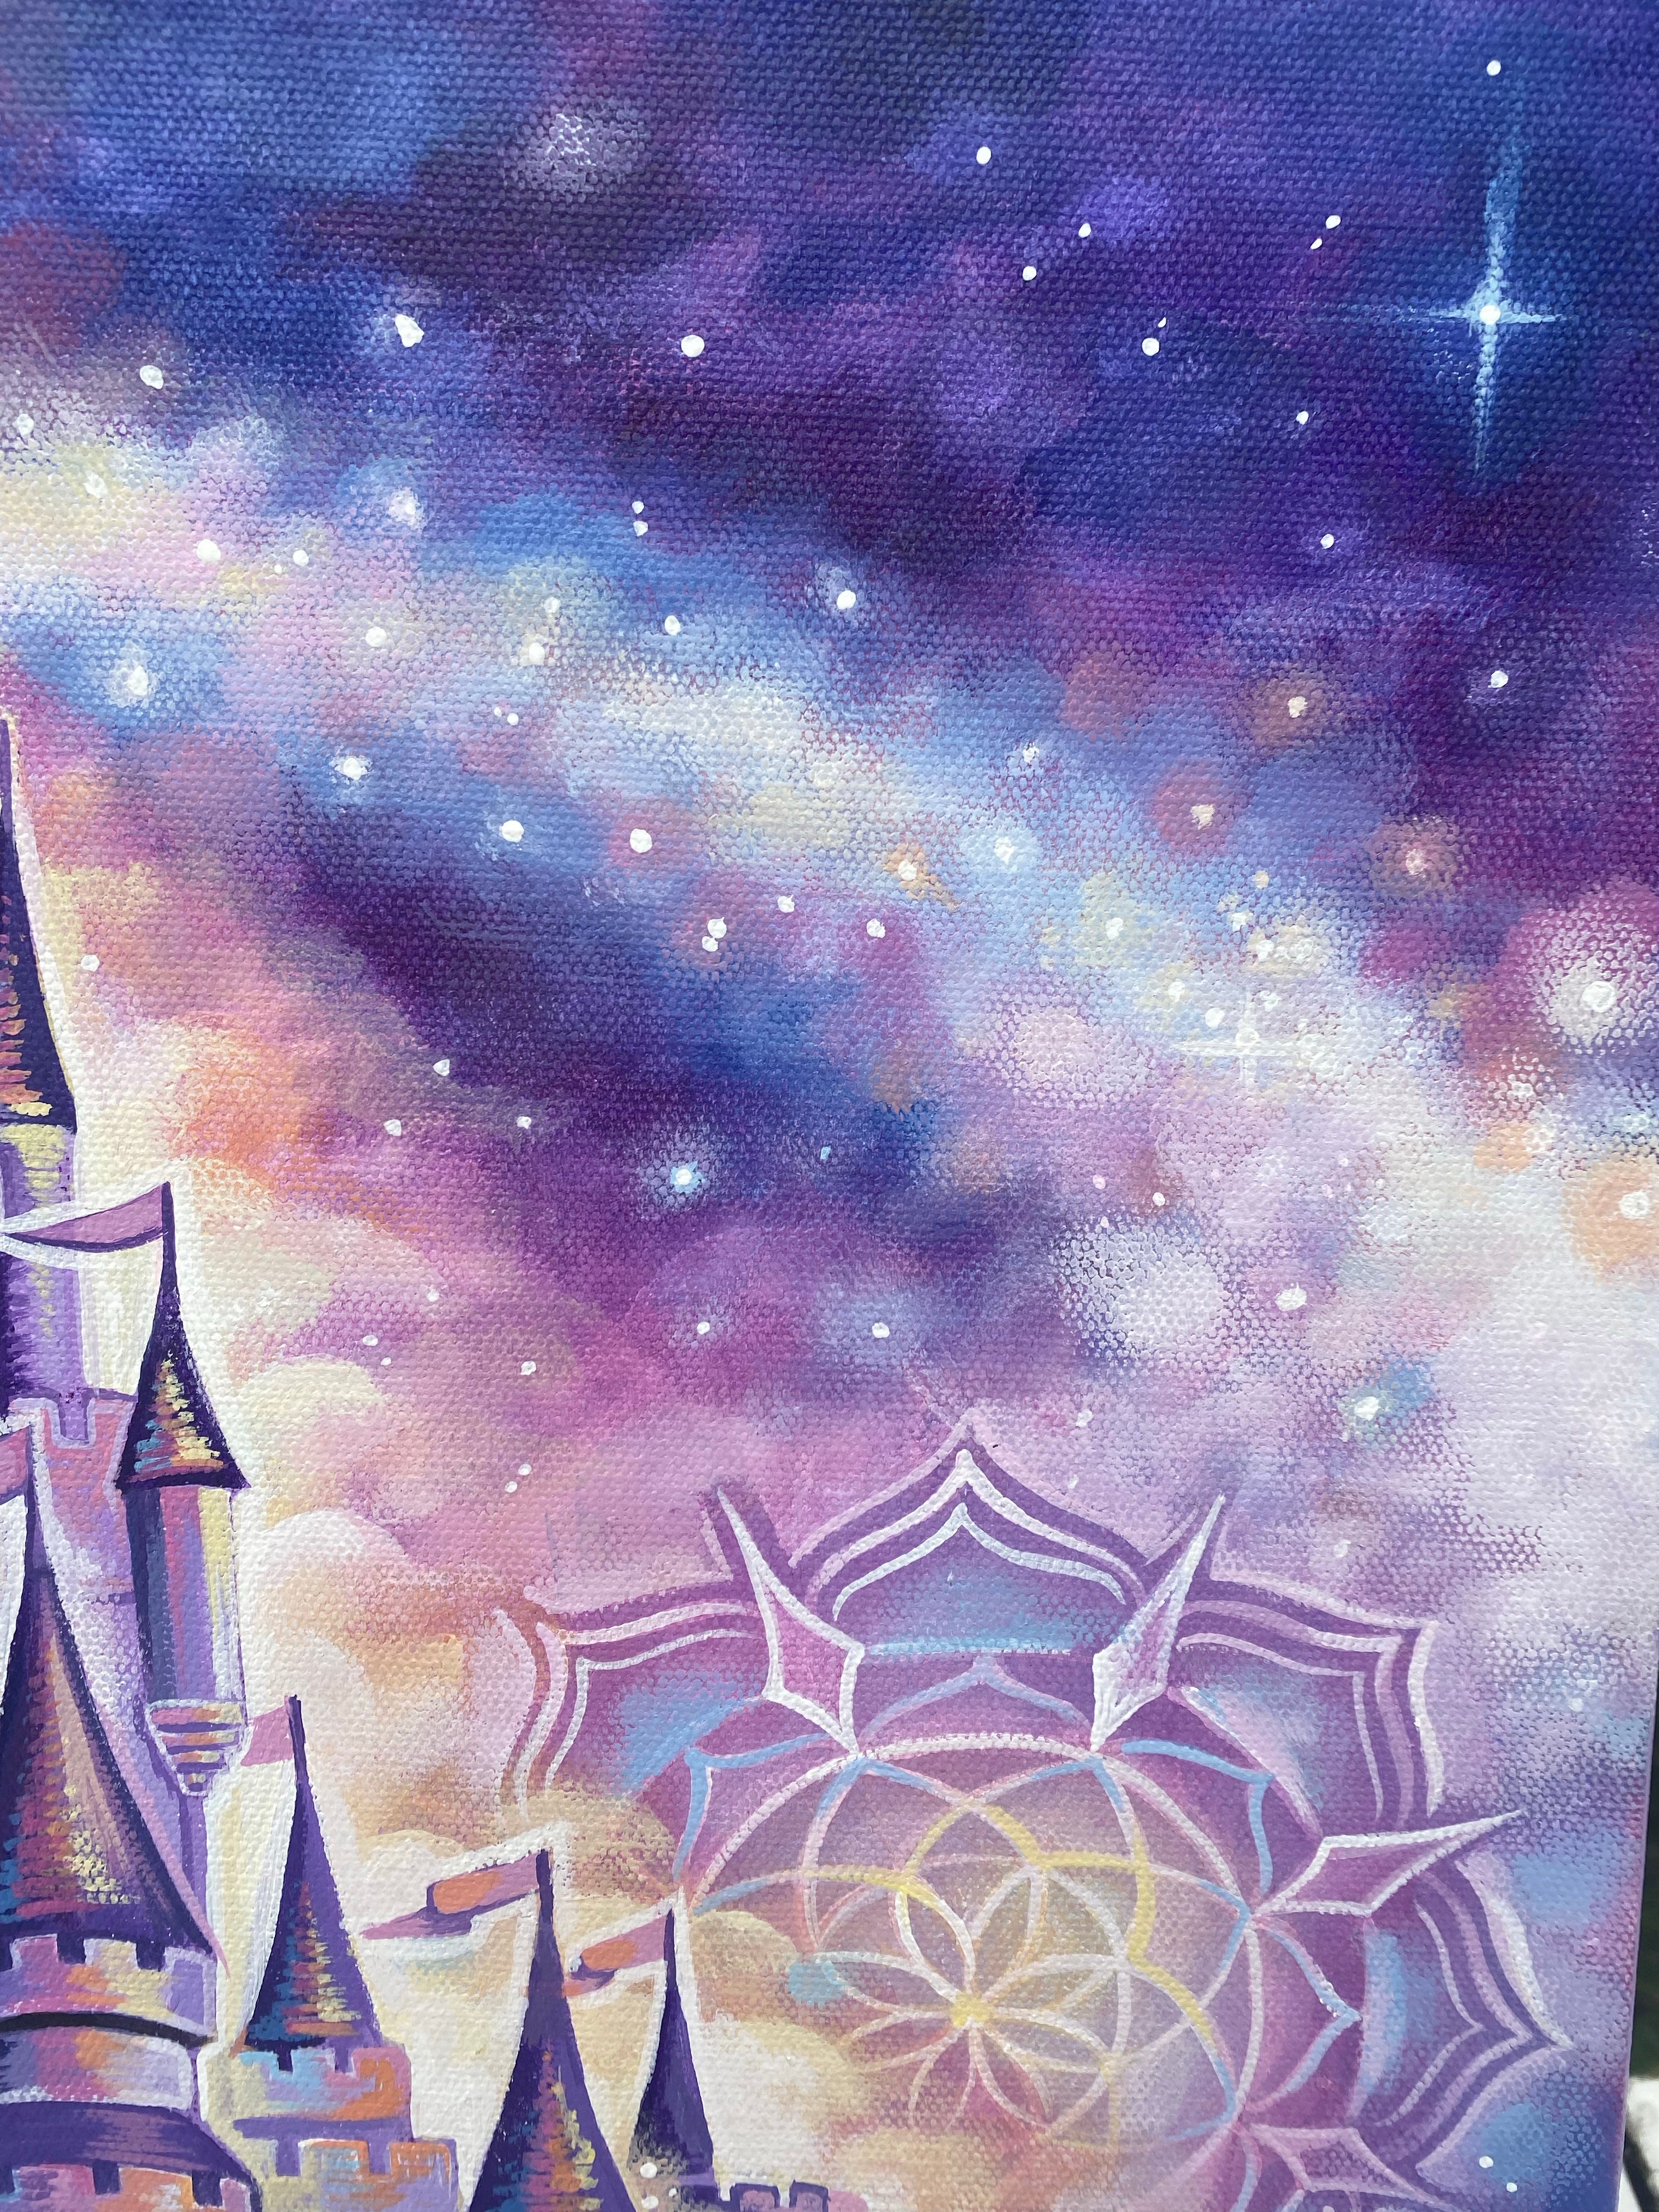 LIMITED EDITION “Disney Magic” Paper Print